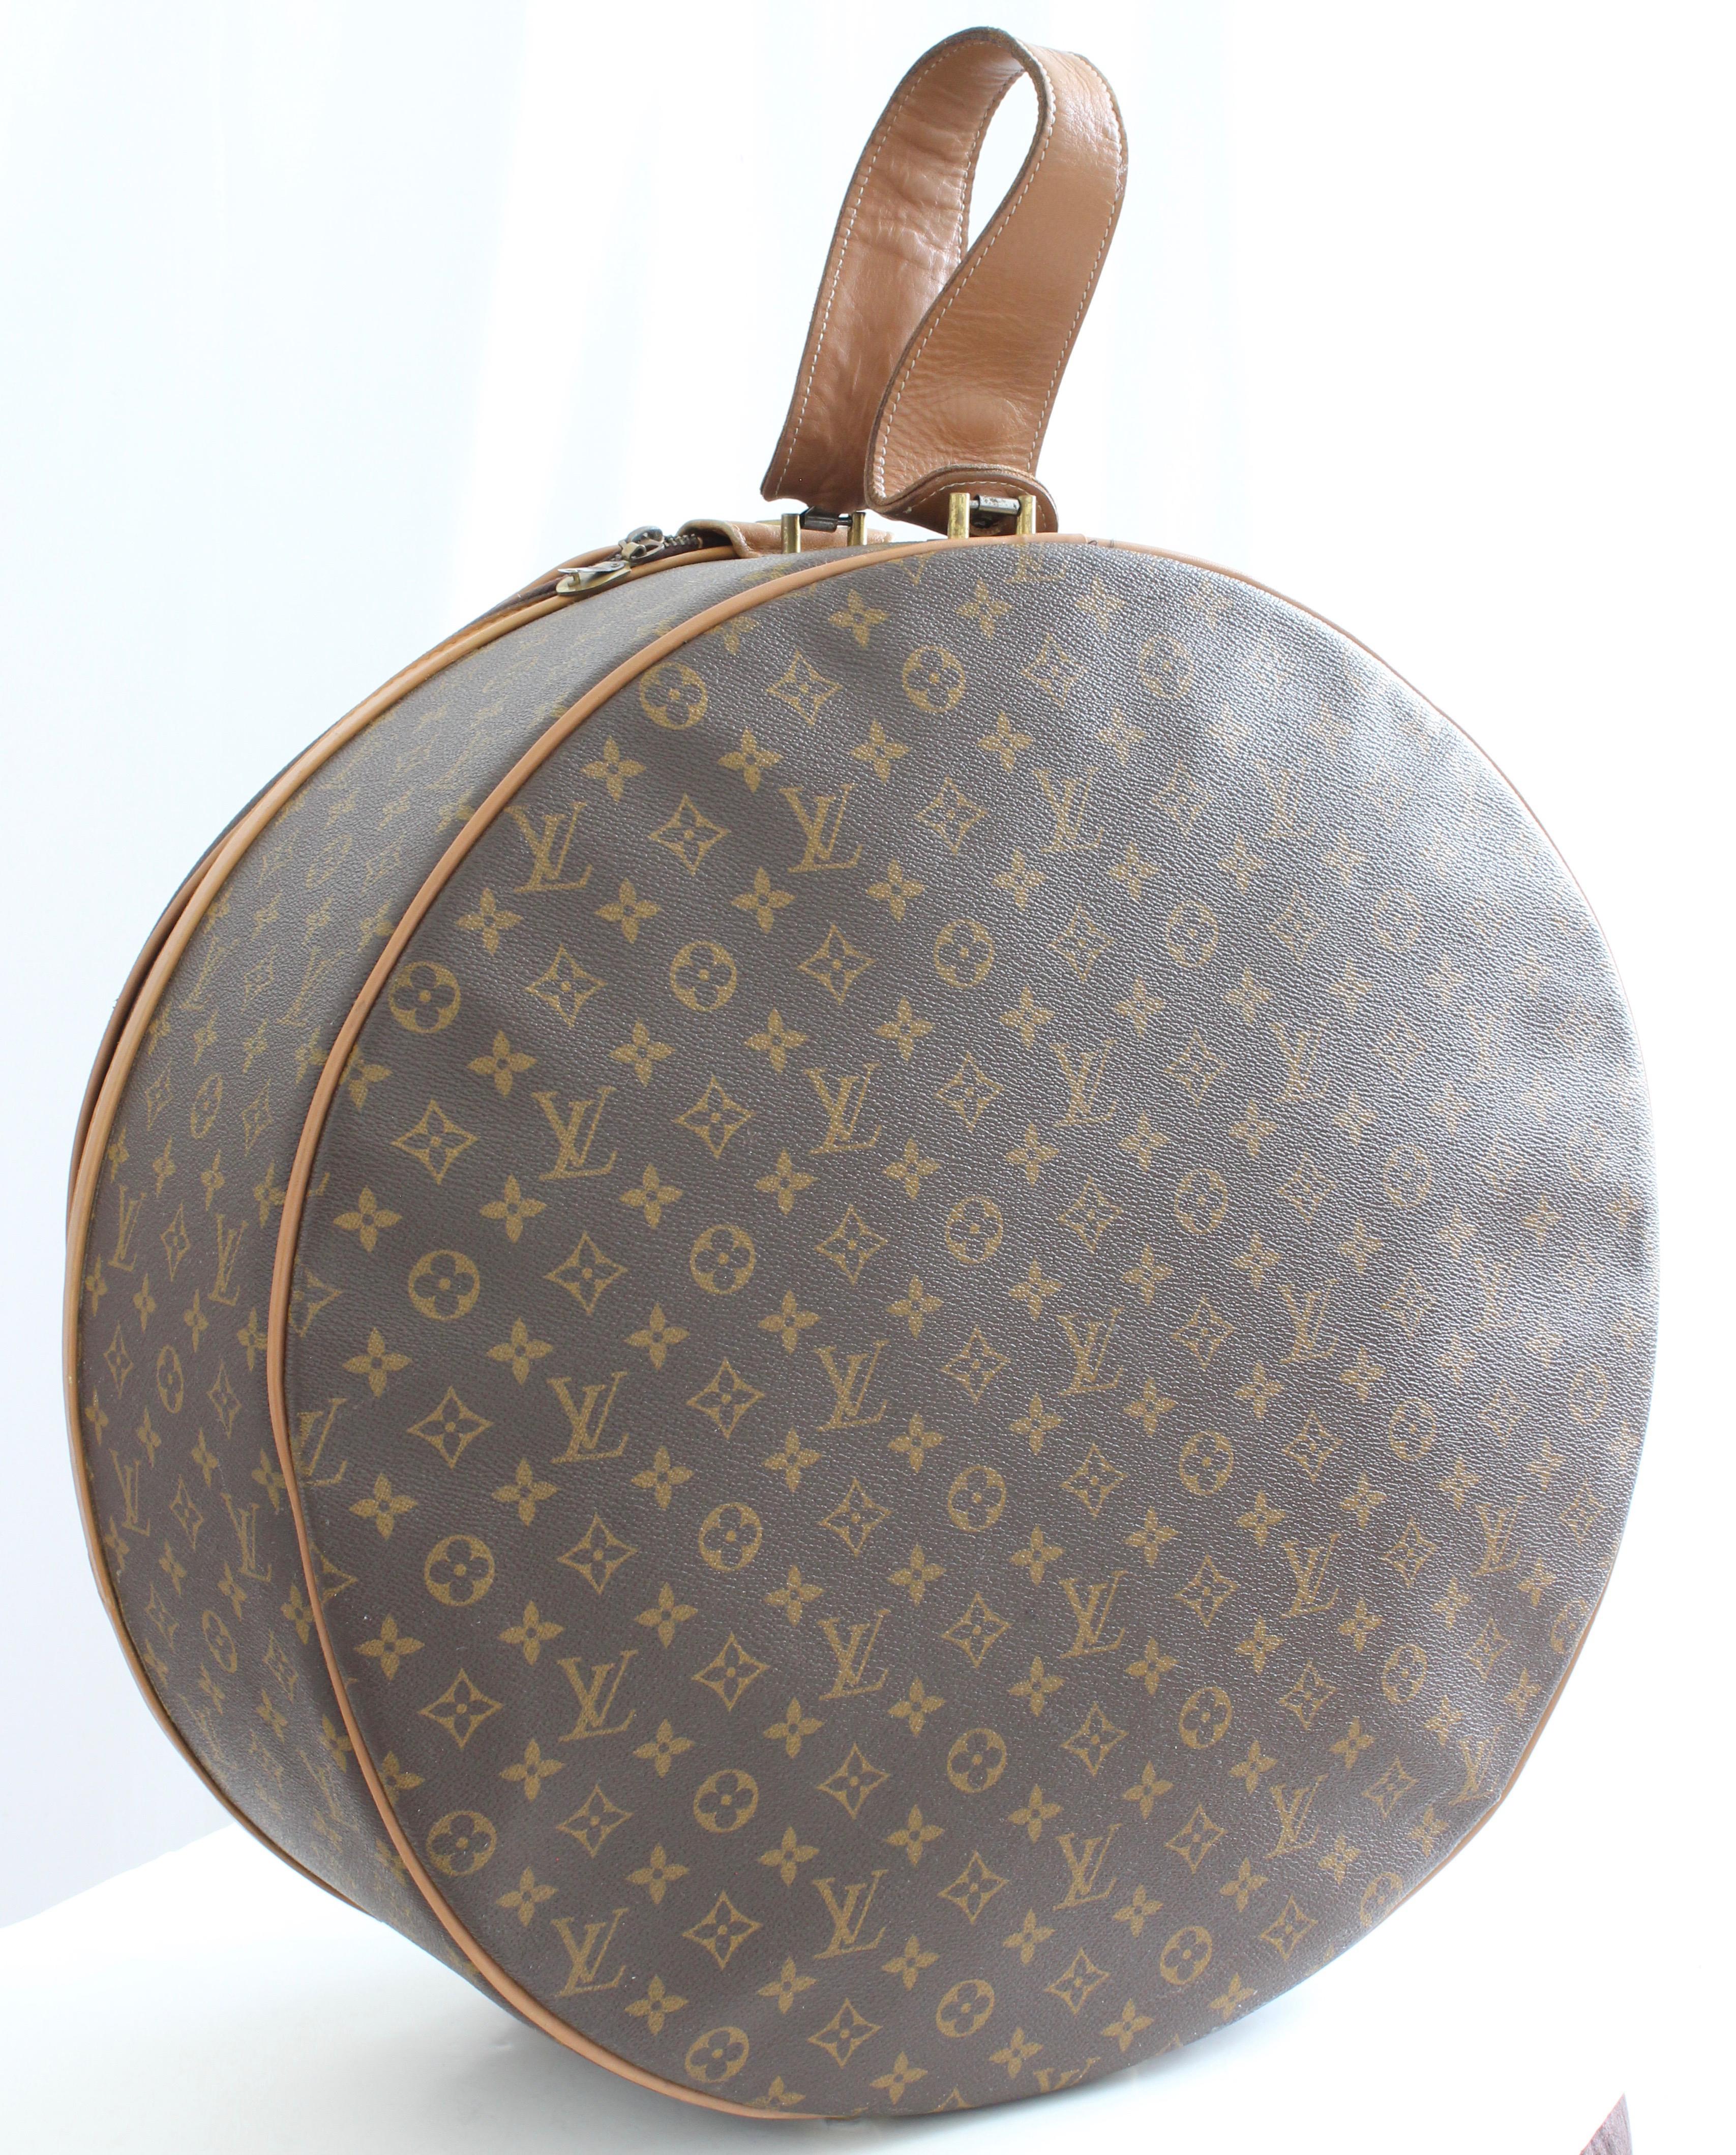 Louis Vuitton The French Company Boite Chapeaux Round Hat Box 50cm Travel Bag  1